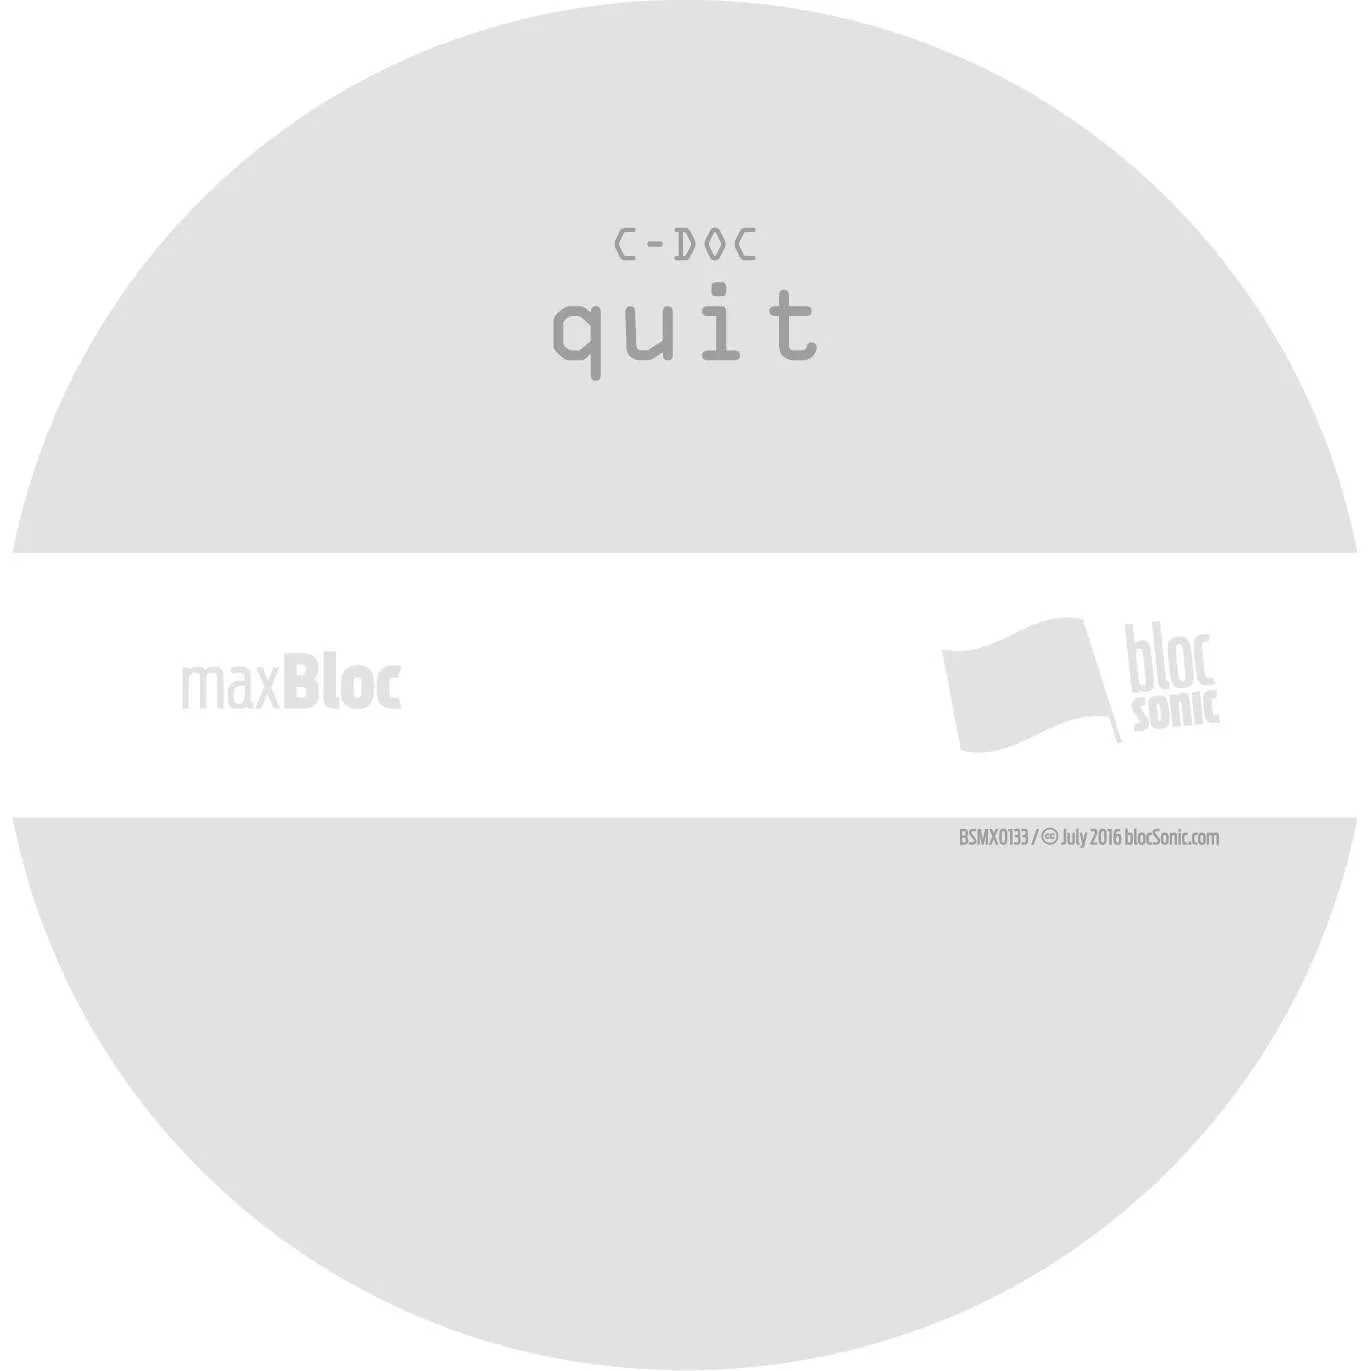 Album disc for “Quit” by C-Doc